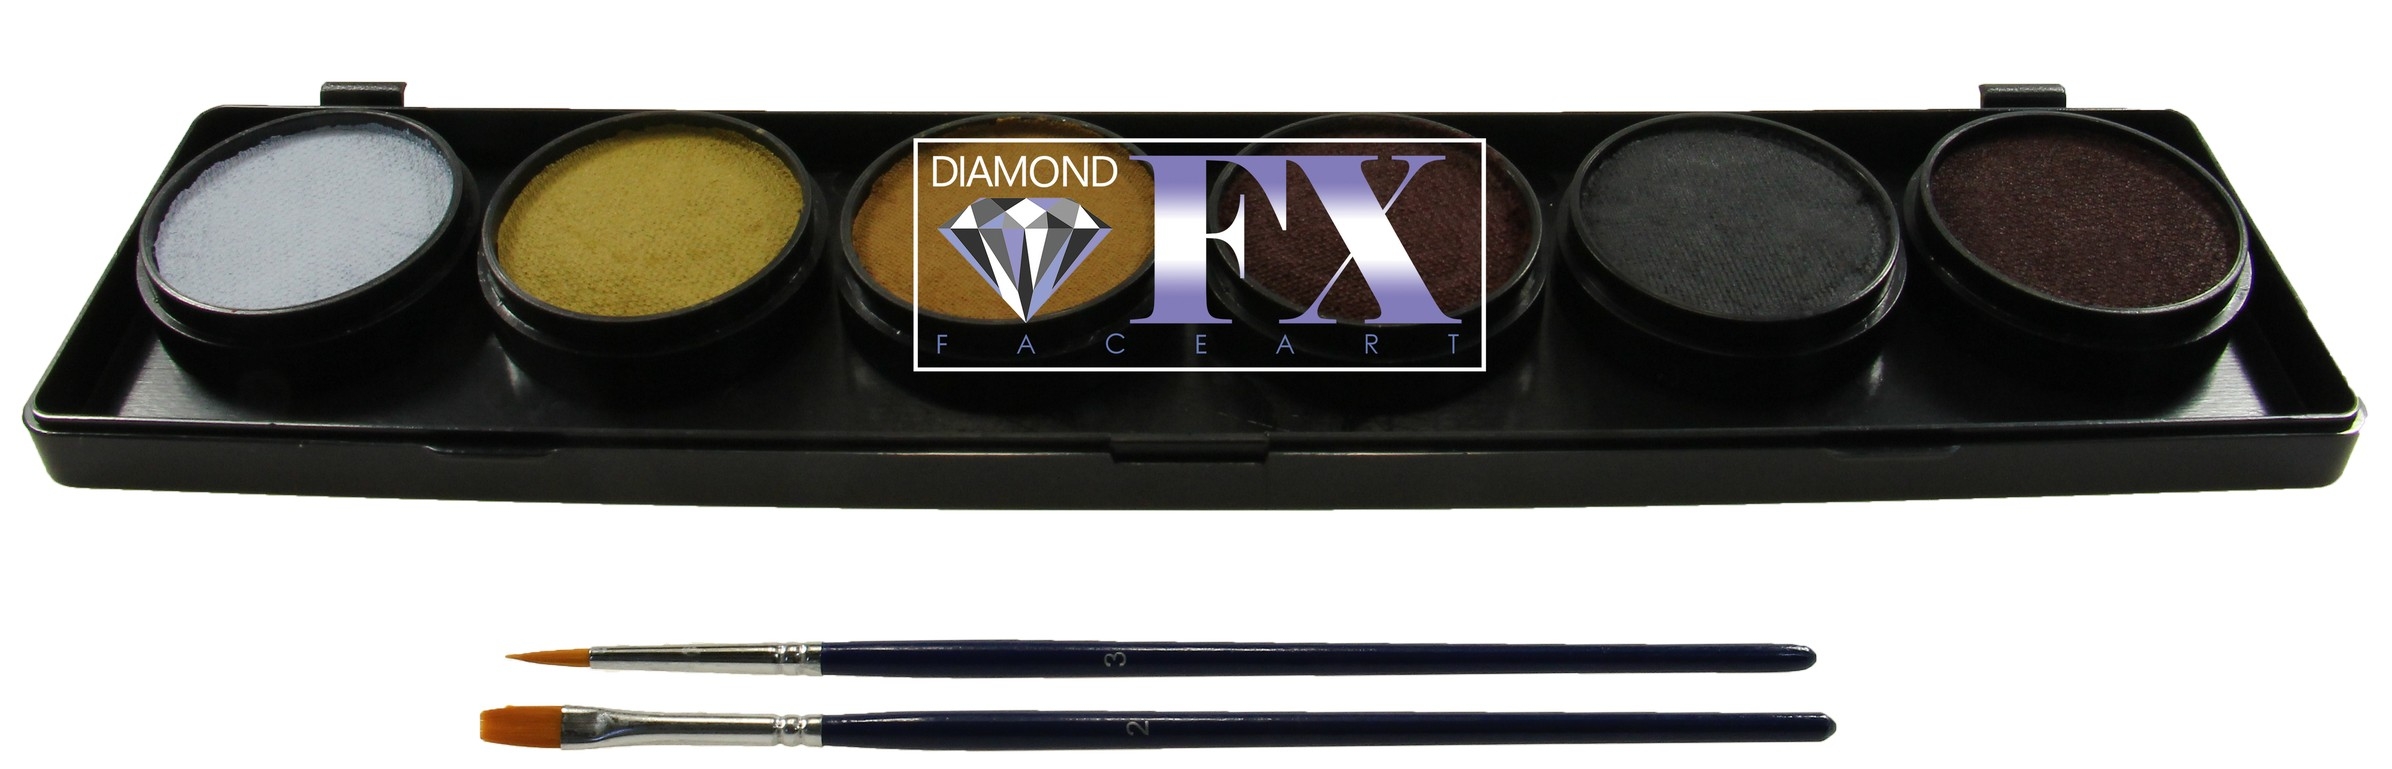 Diamond FX Palette 6 colors Beast (6x10Gram)